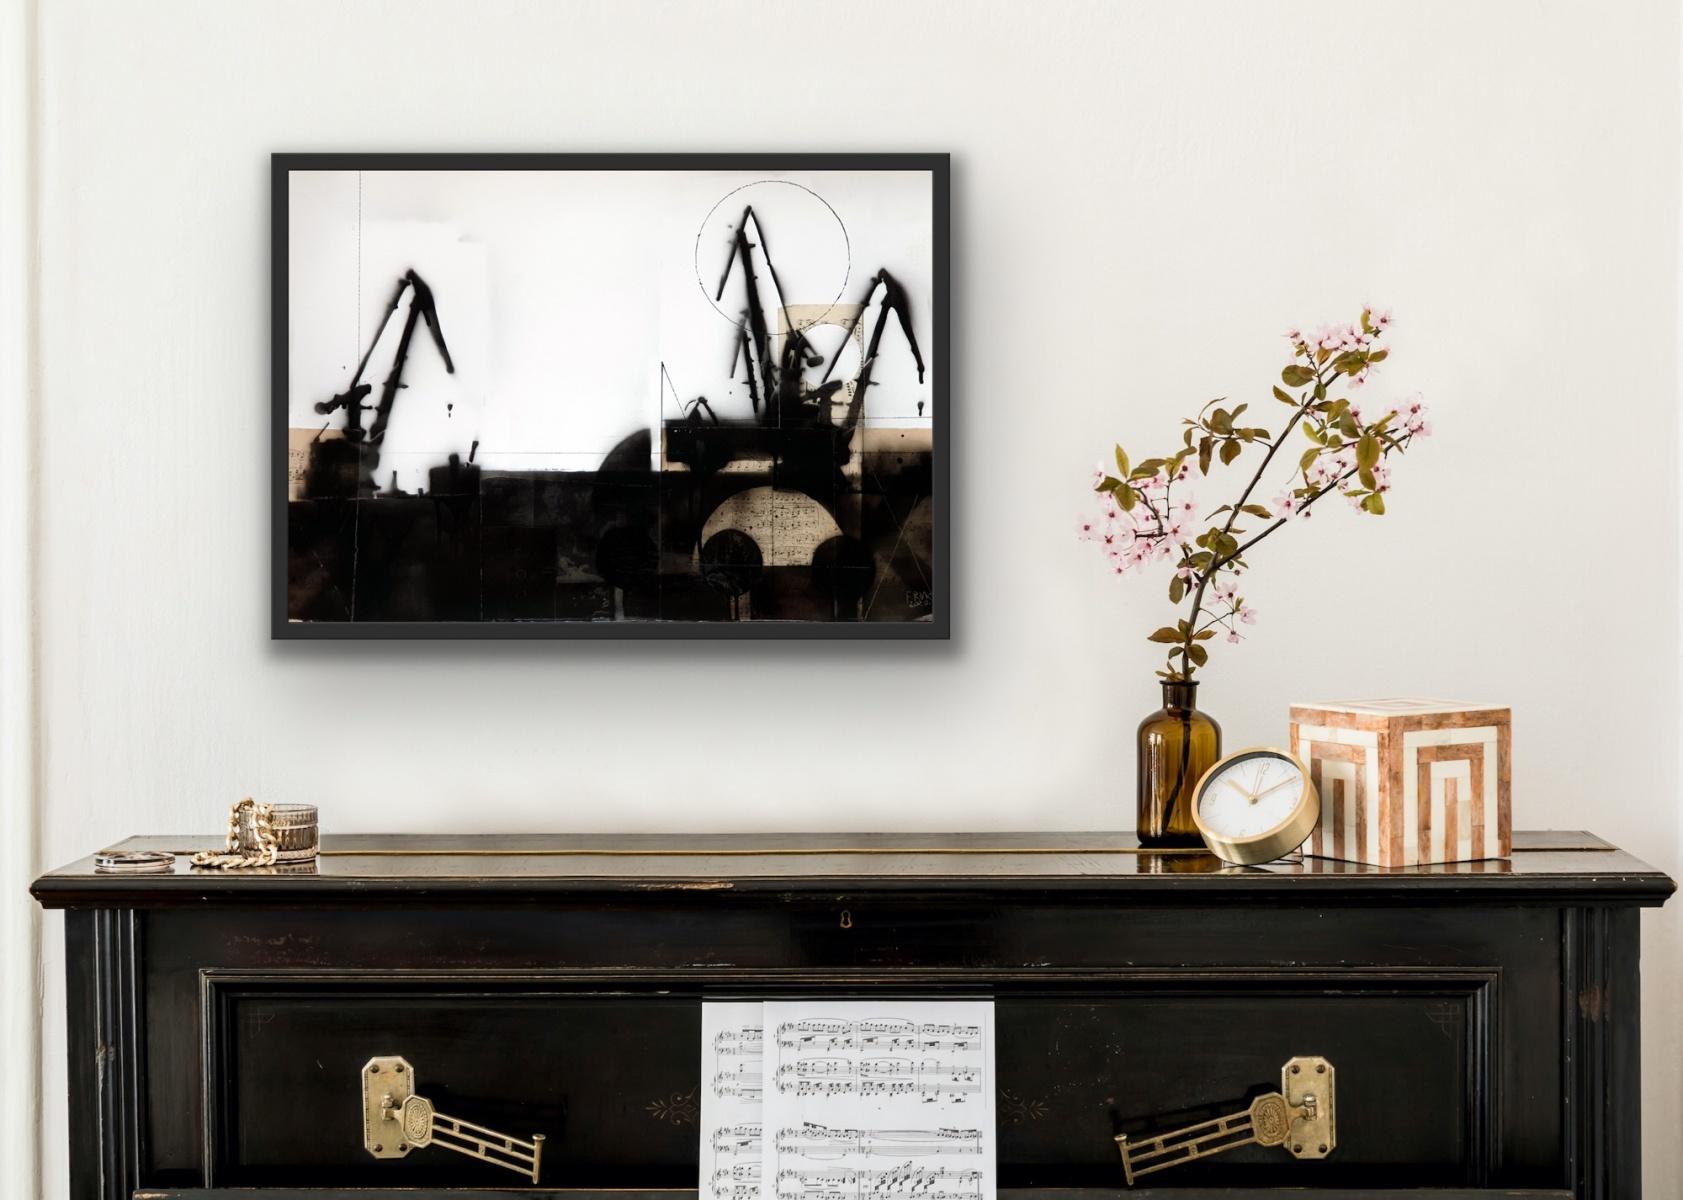 Cranes 5 - Peinture en noir et blanc, Mixed media, Collage, Polish art - Abstrait Painting par Lukasz Fruczek